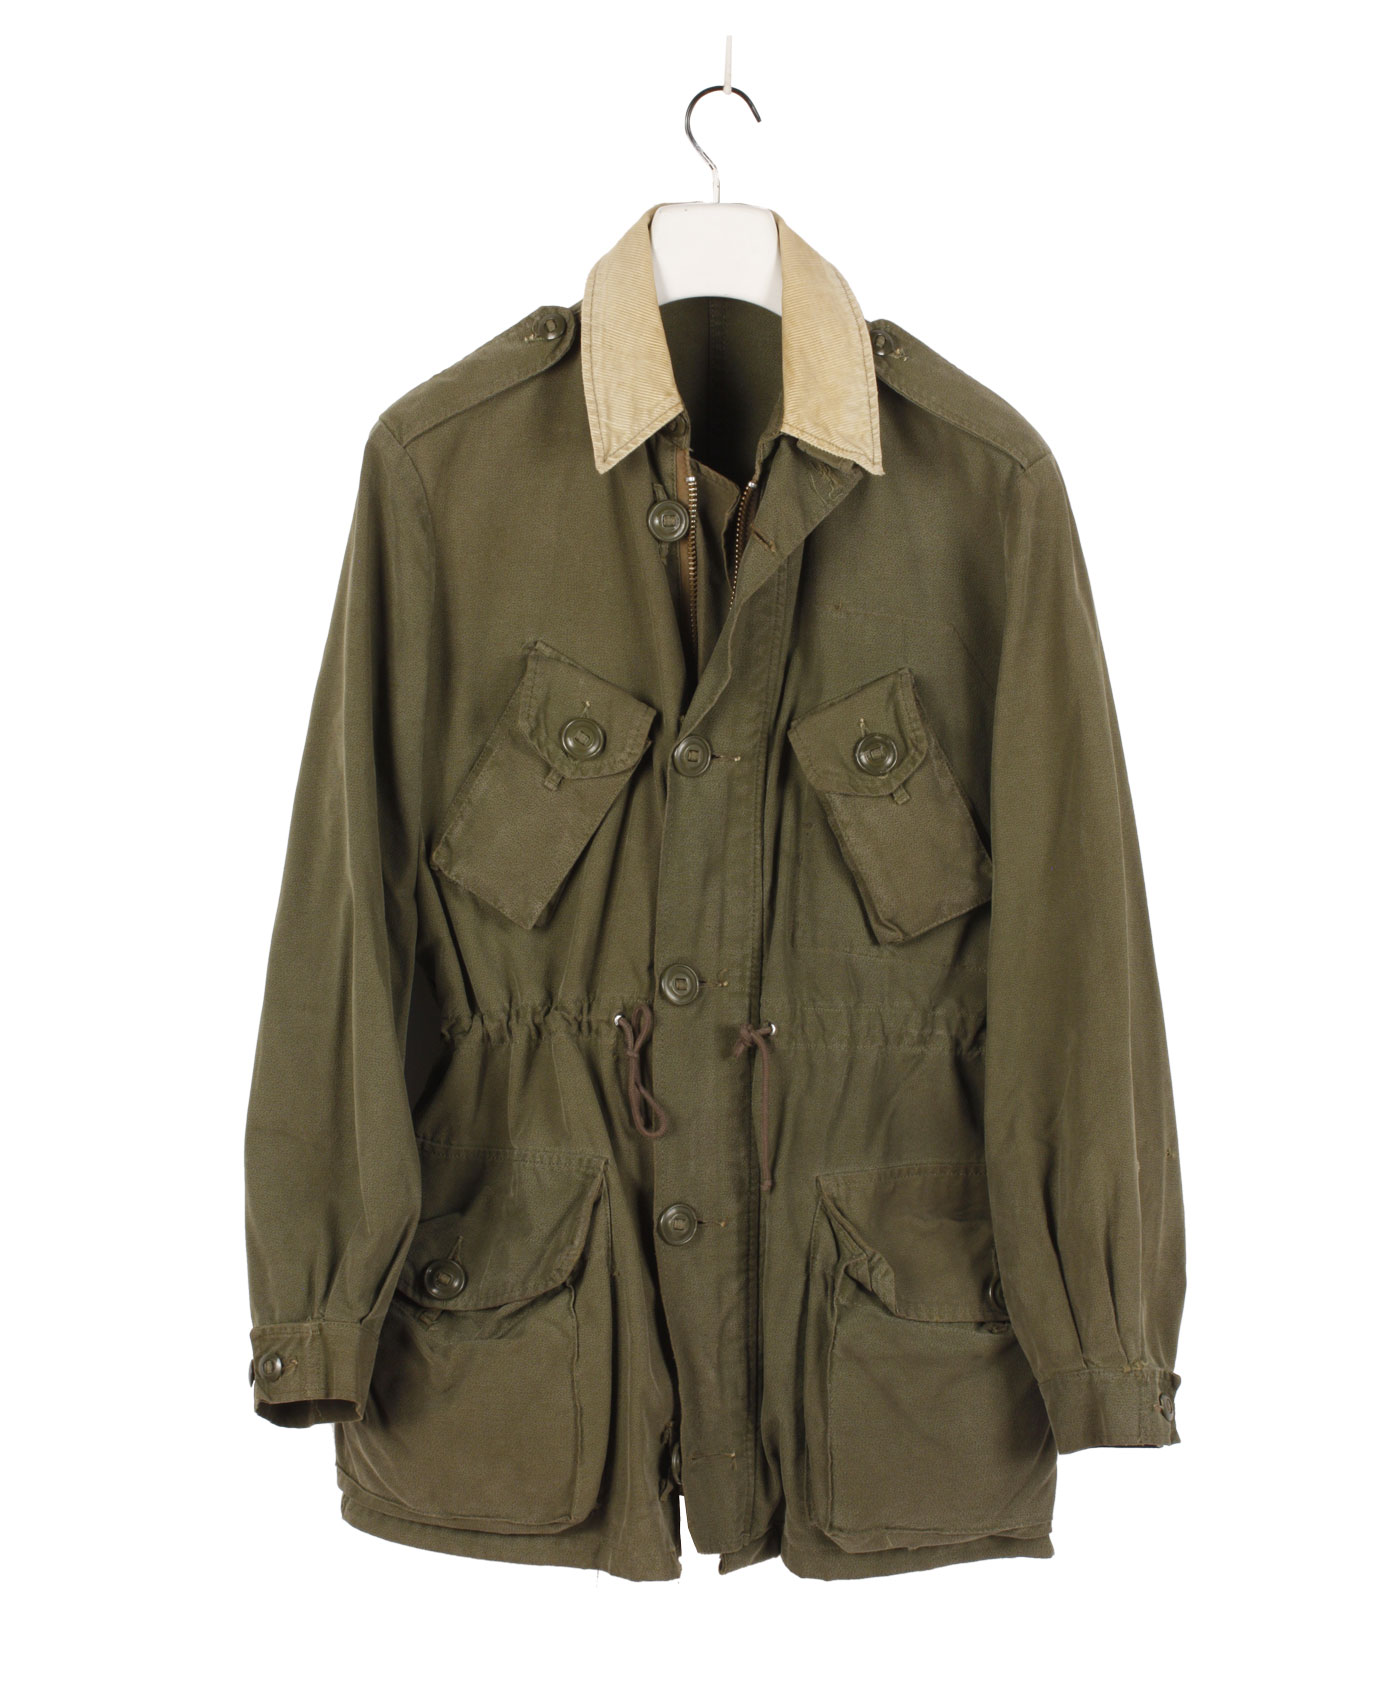 Military Field jacket ’60s